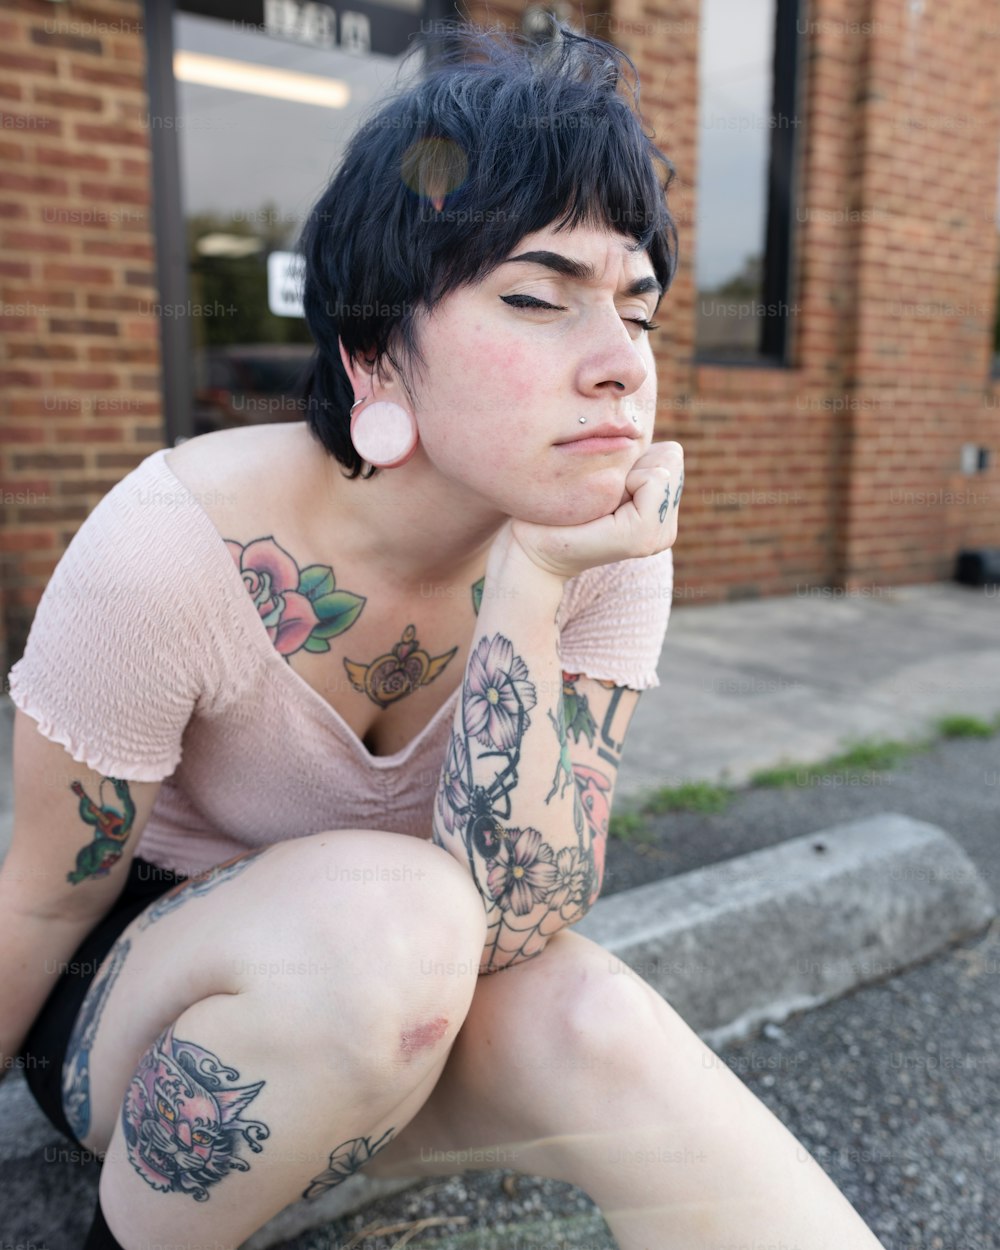 Una donna con i tatuaggi seduta a terra